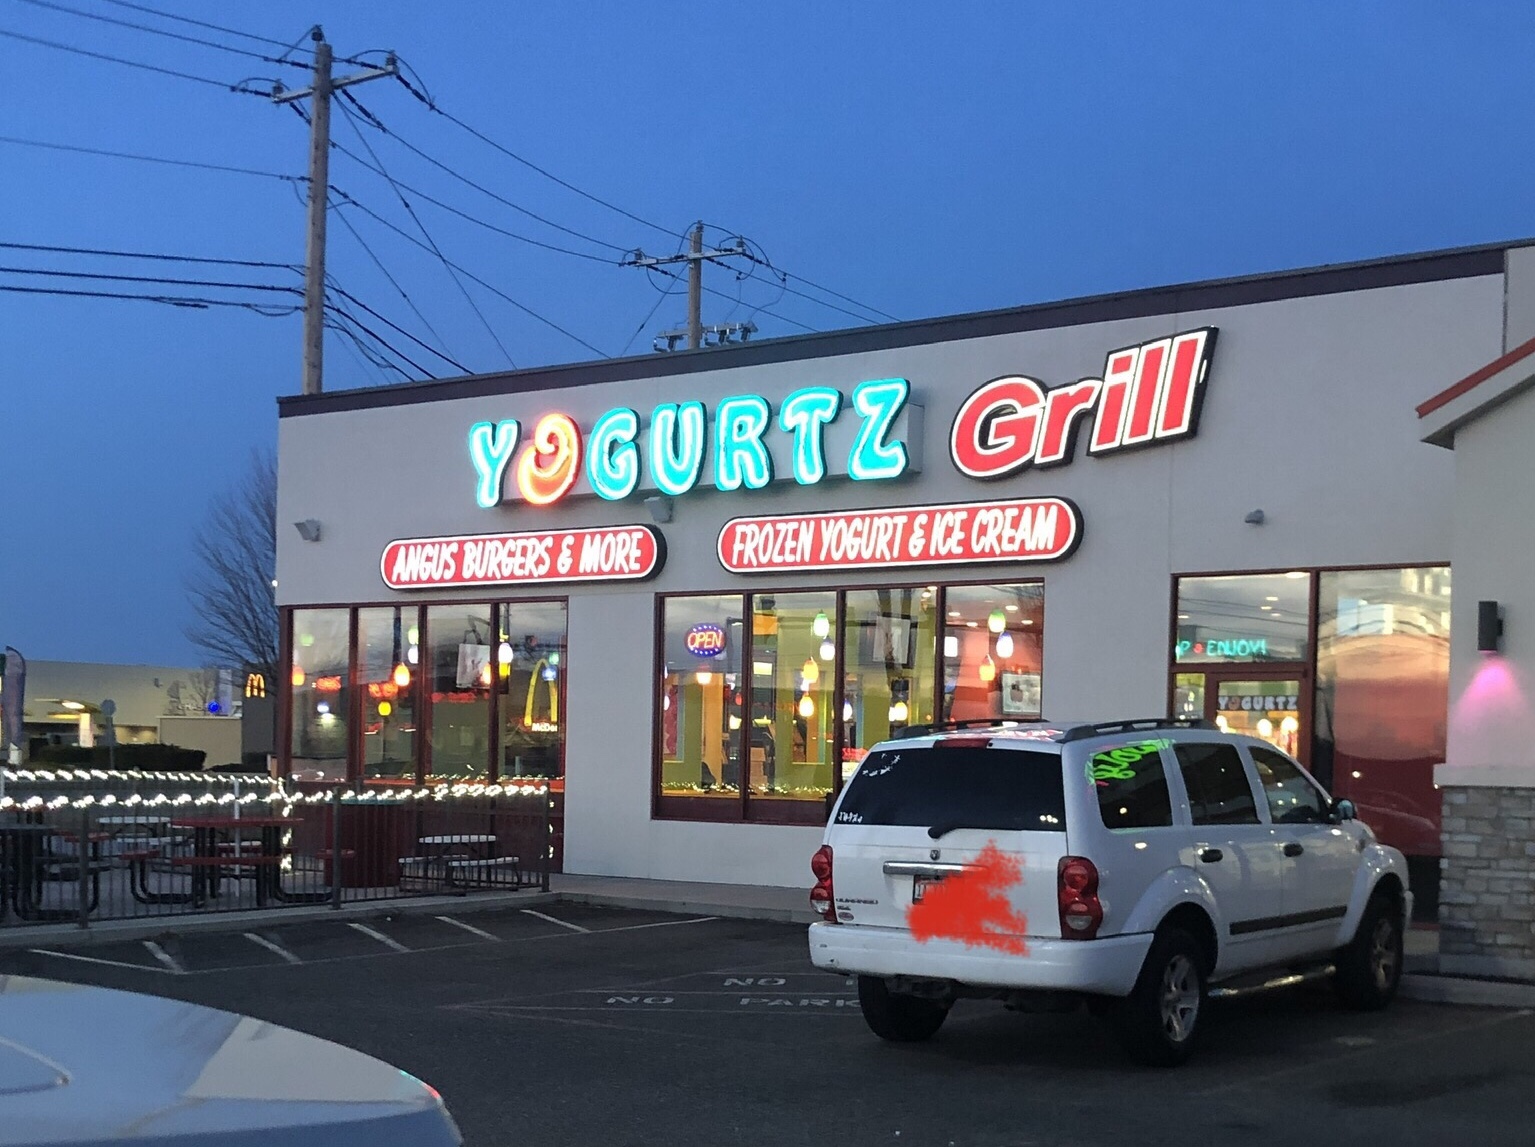 Yogurtz Grill